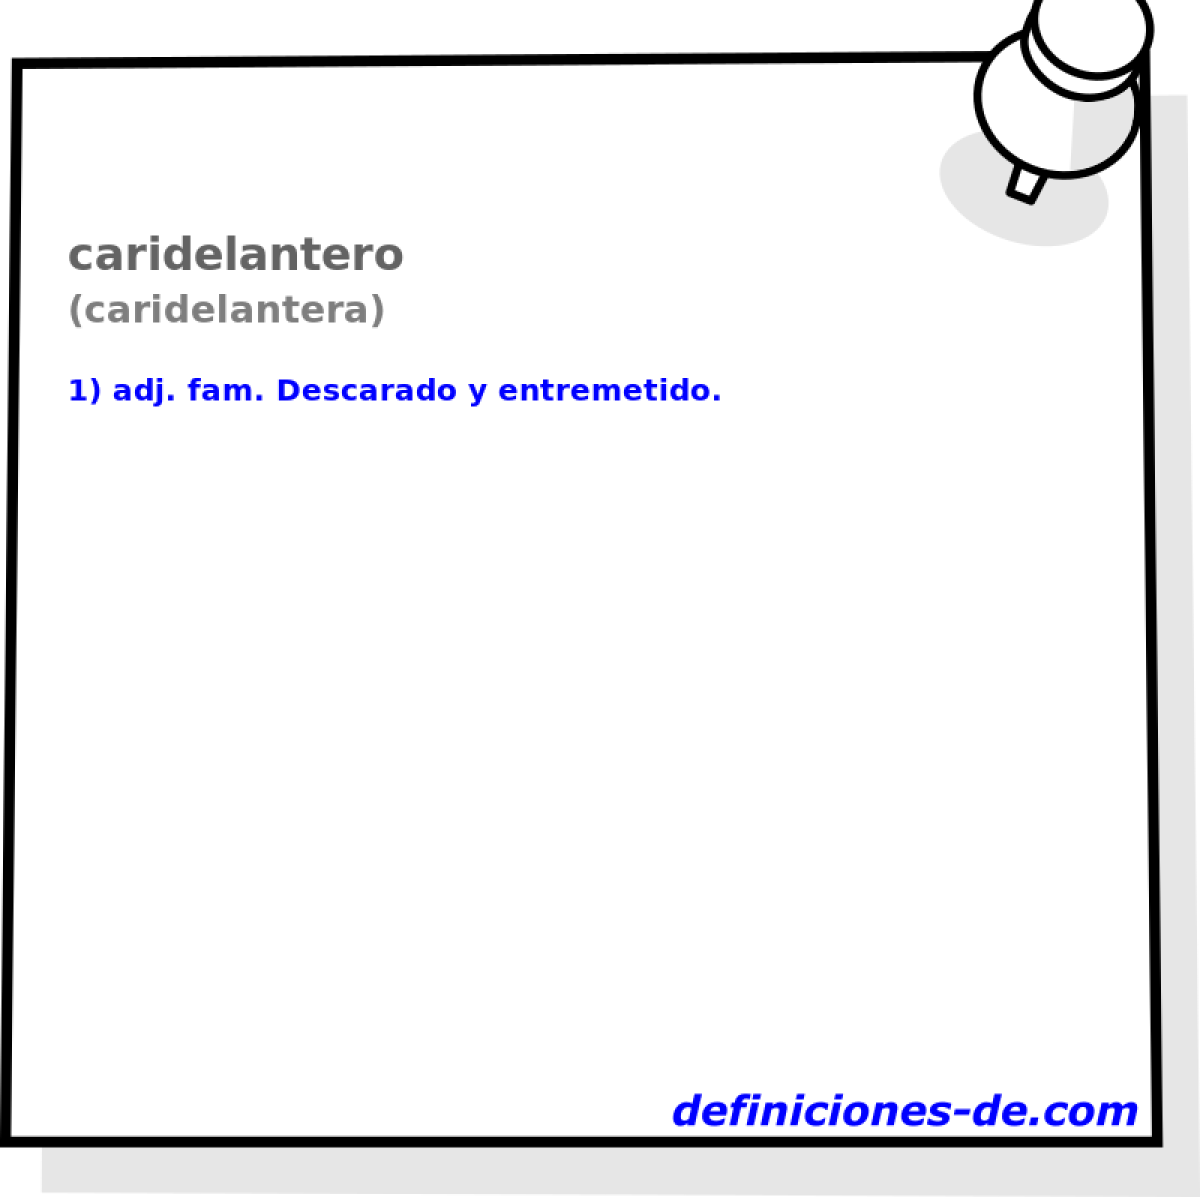 caridelantero (caridelantera)